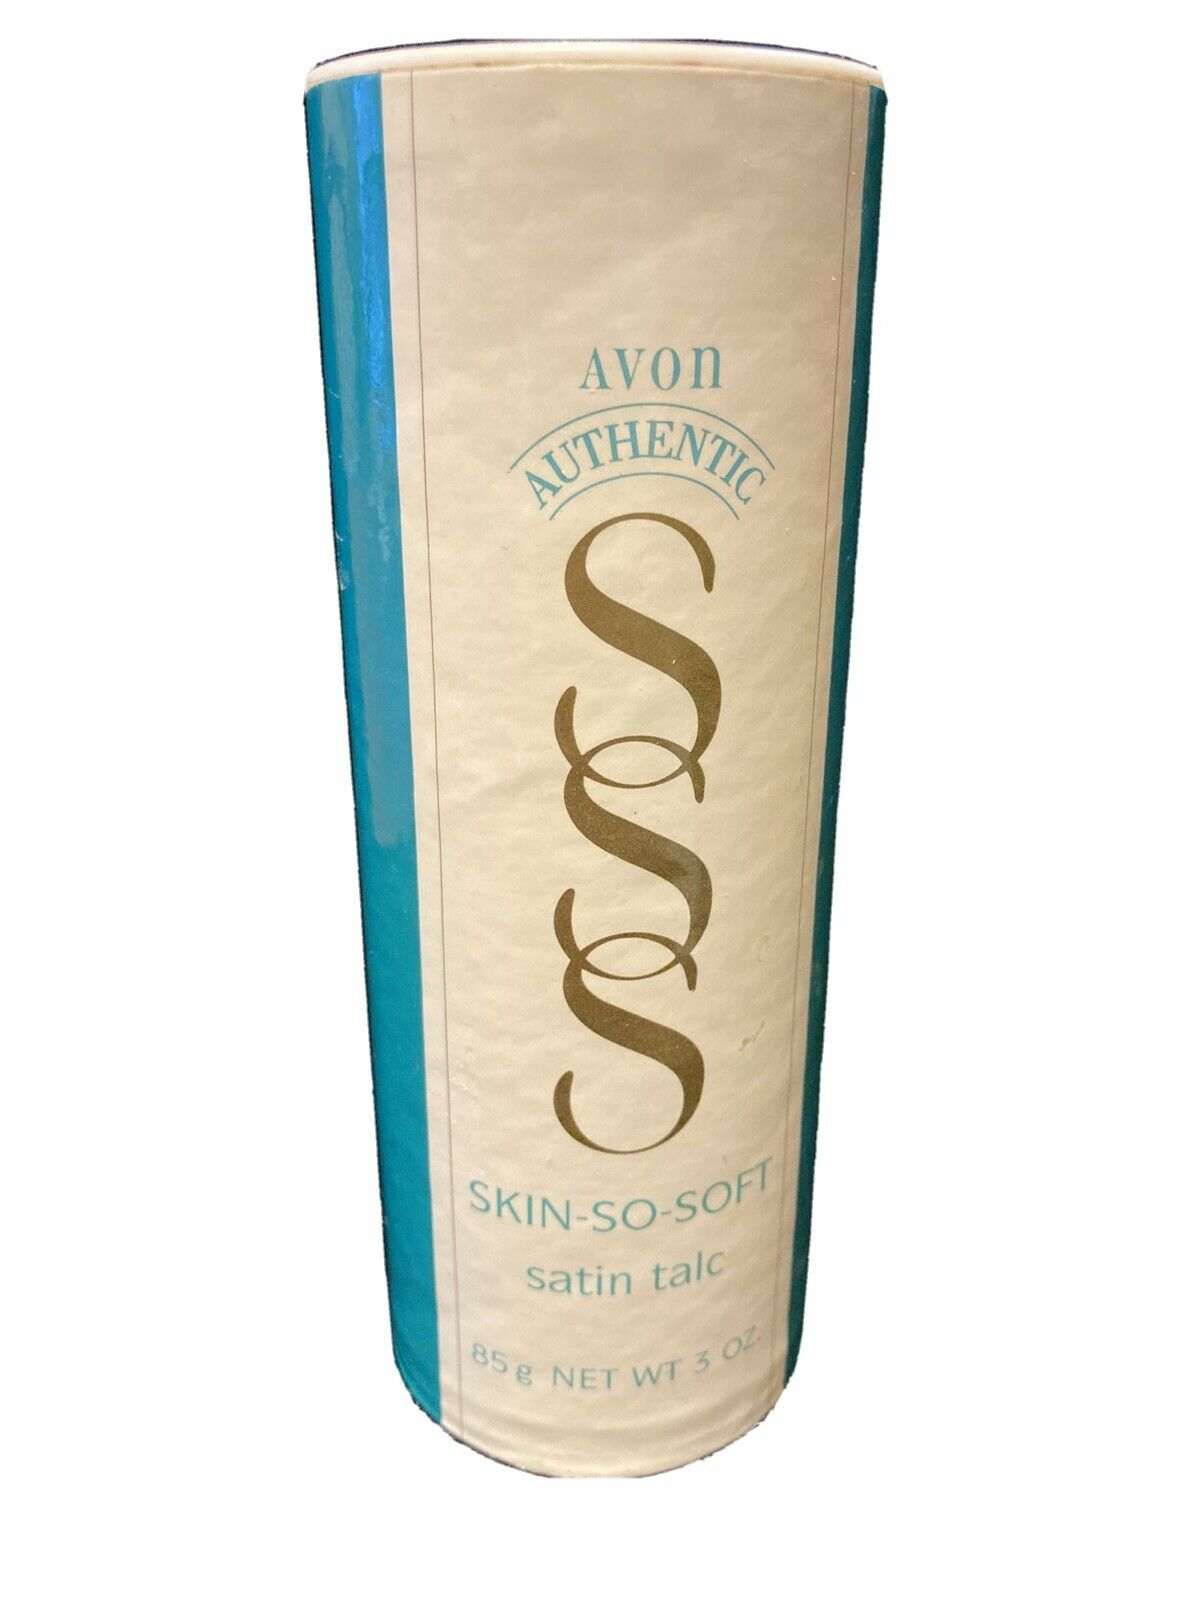 Avon Authentic Skin So Soft Satin Talc 1987 Discontinued